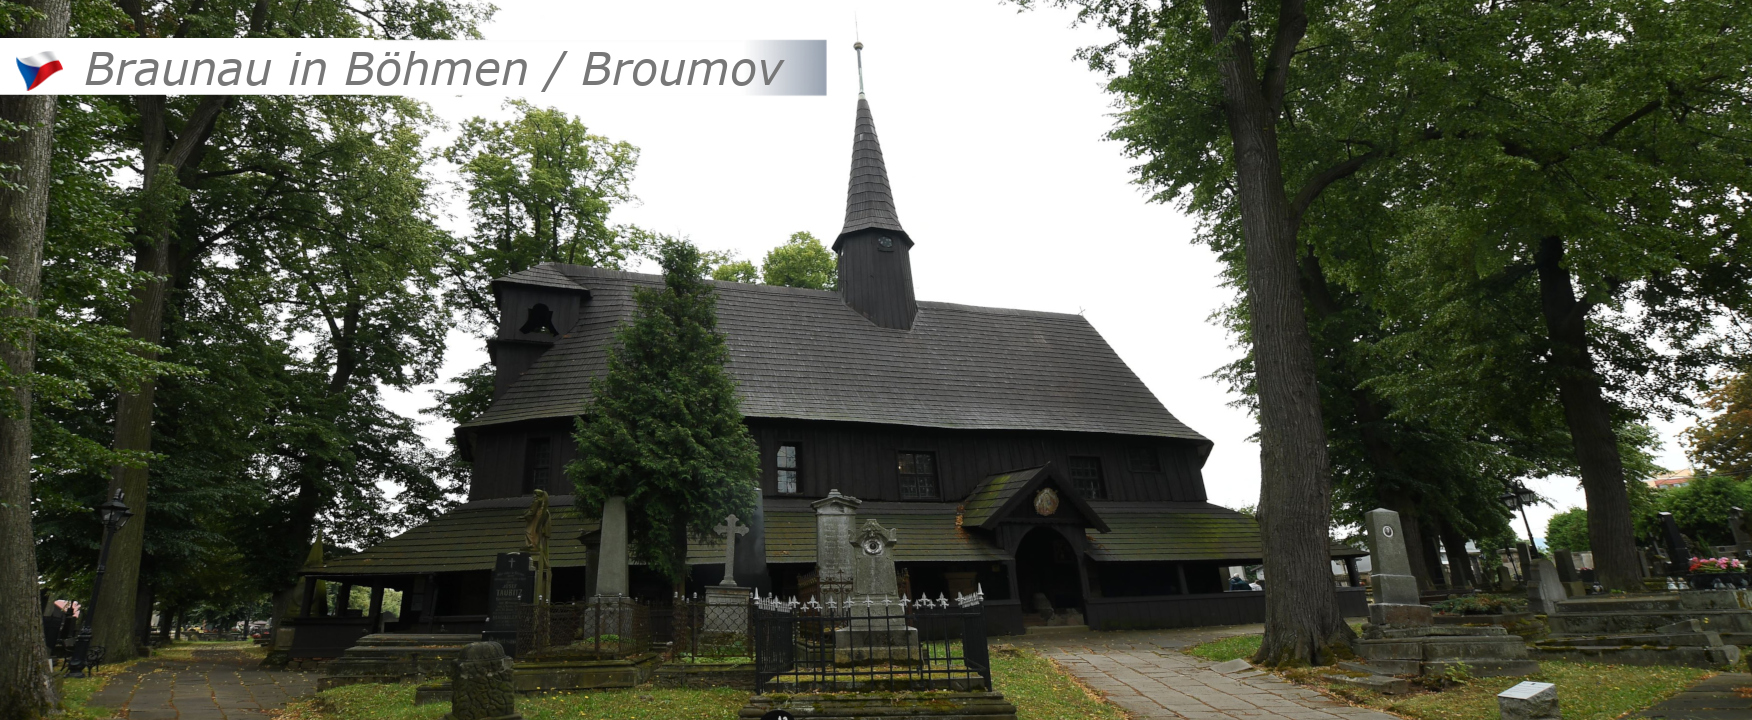 Broumov / Braunau in Böhmen